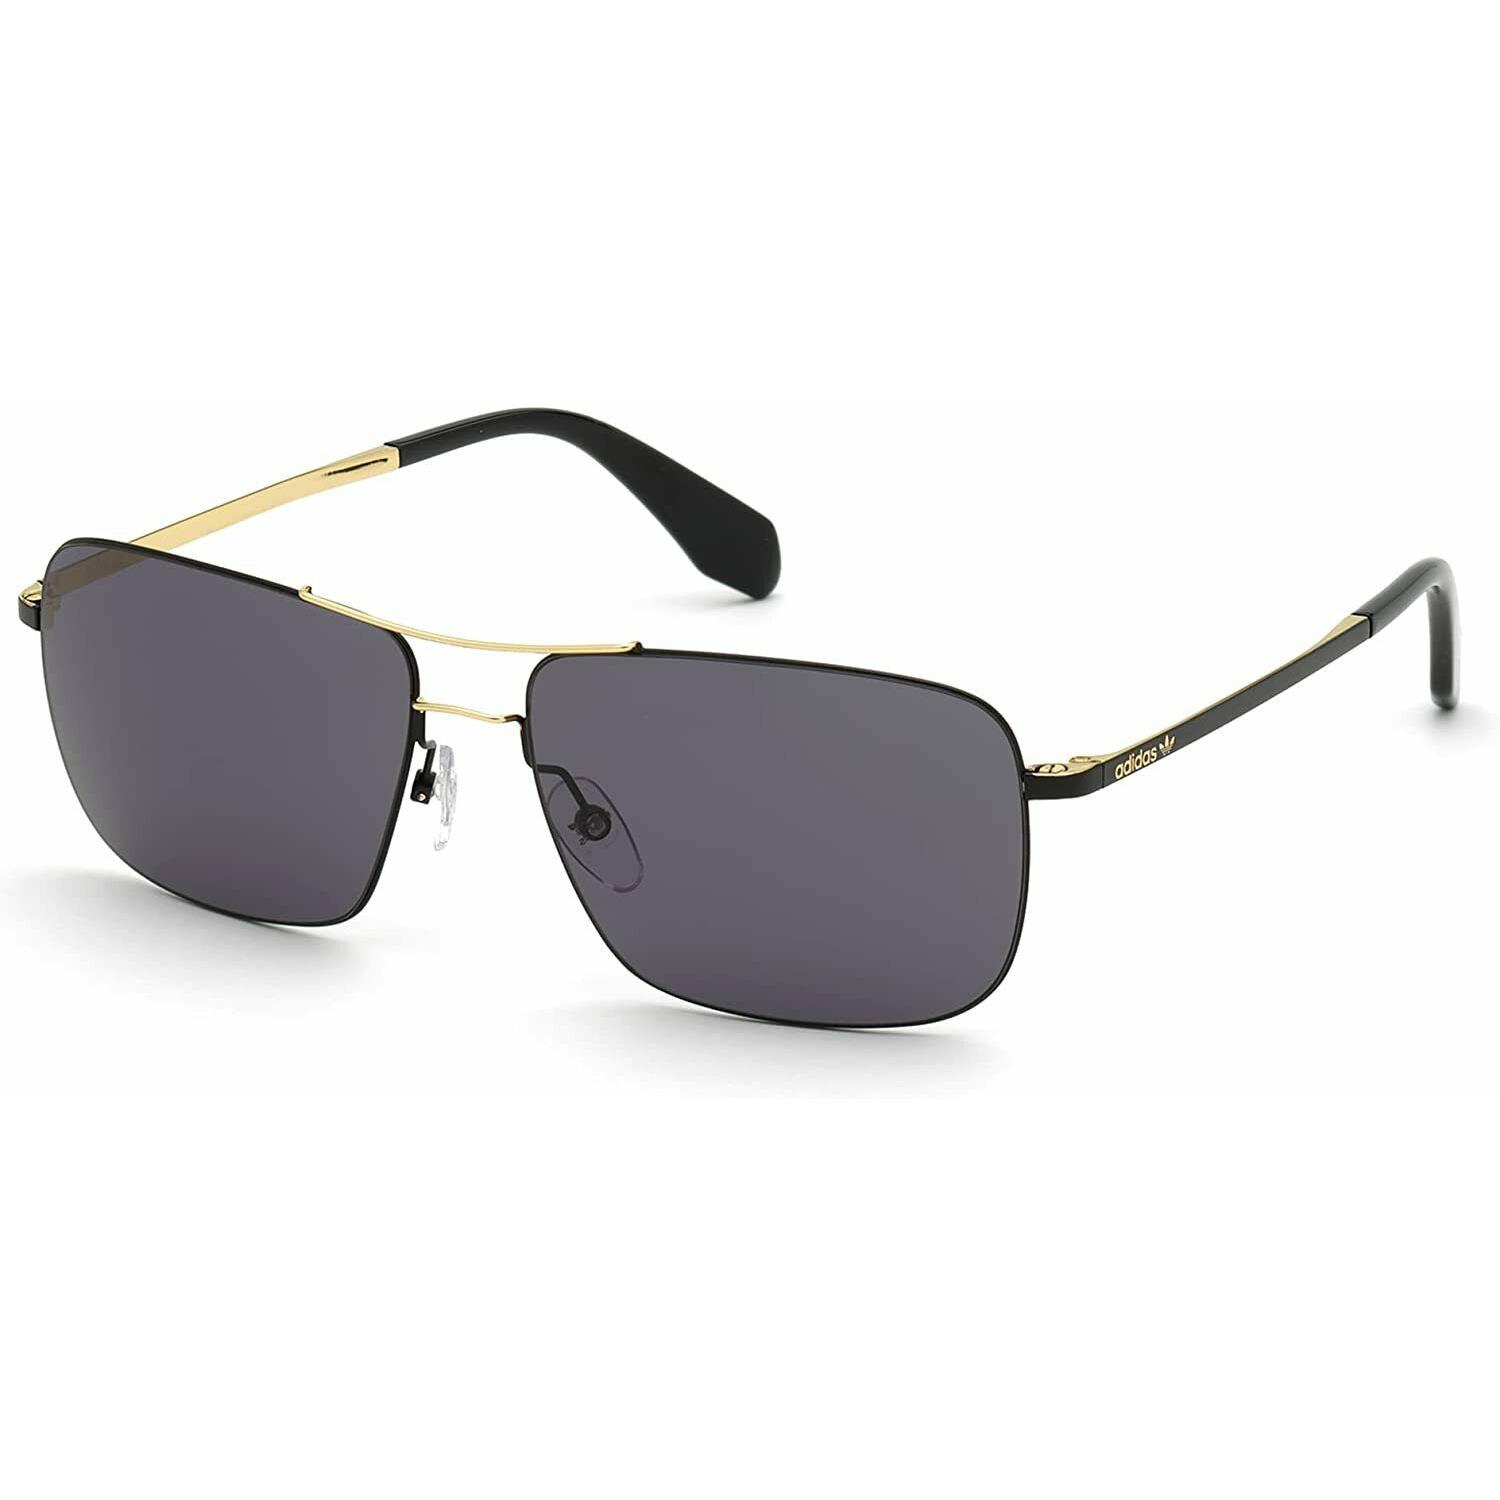 Adidas Originals Metal Semi Rimless Sunglasses Black Gold / Gray Lenses